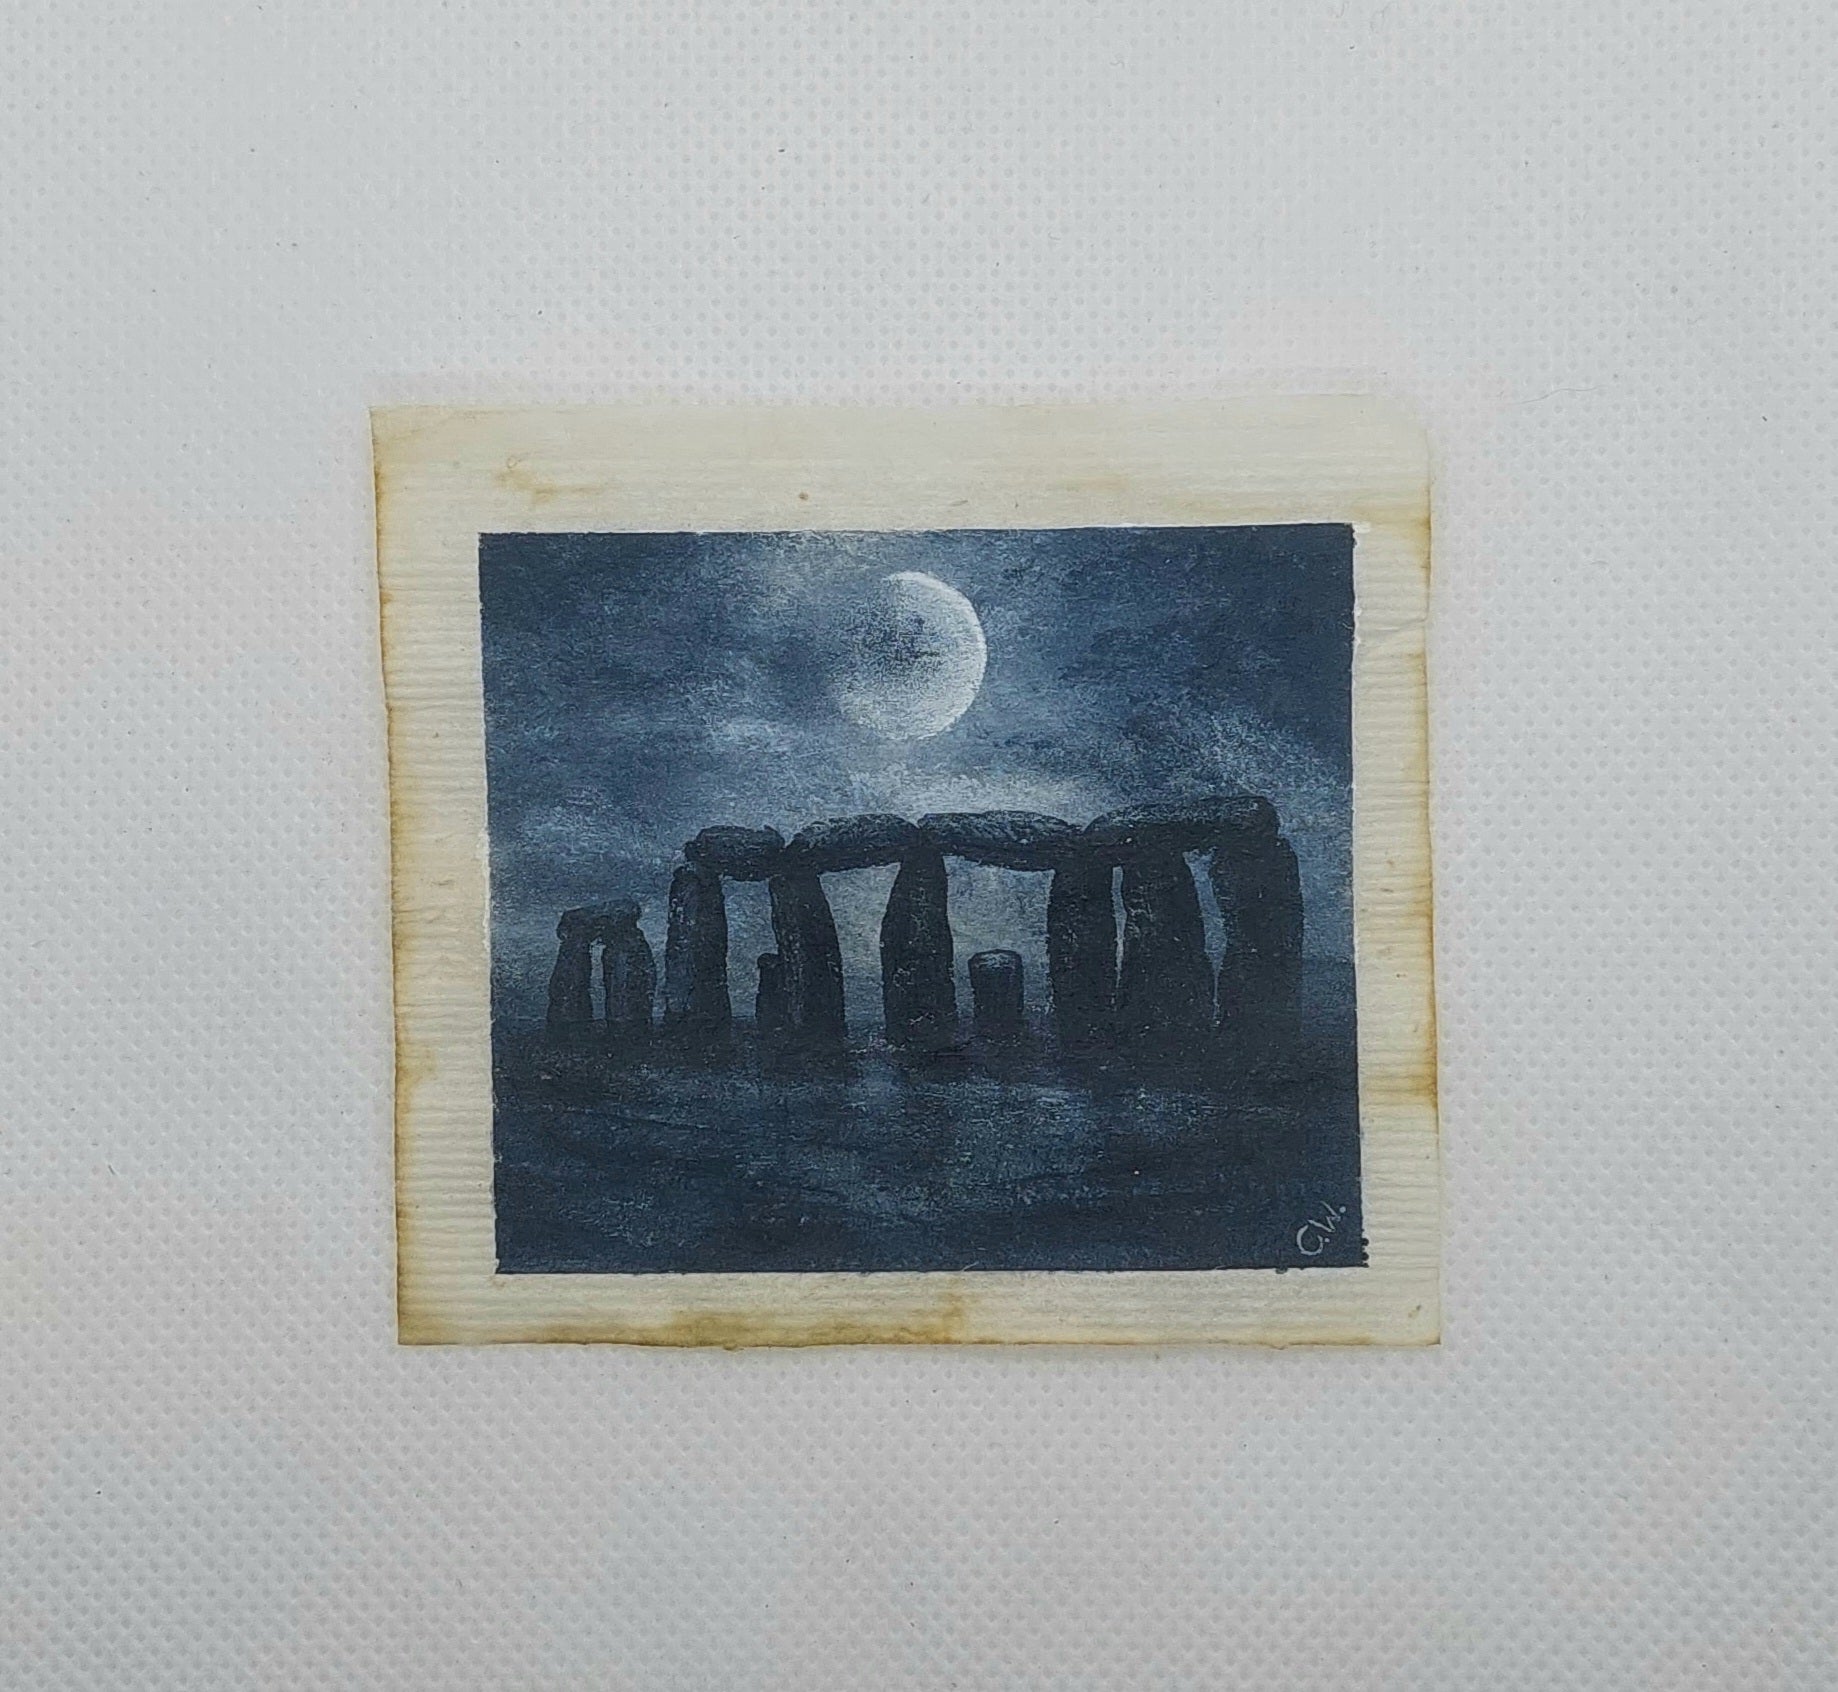 Mrs West said her favourite landmark to paint has been Stonehenge (Caroline West/PA)